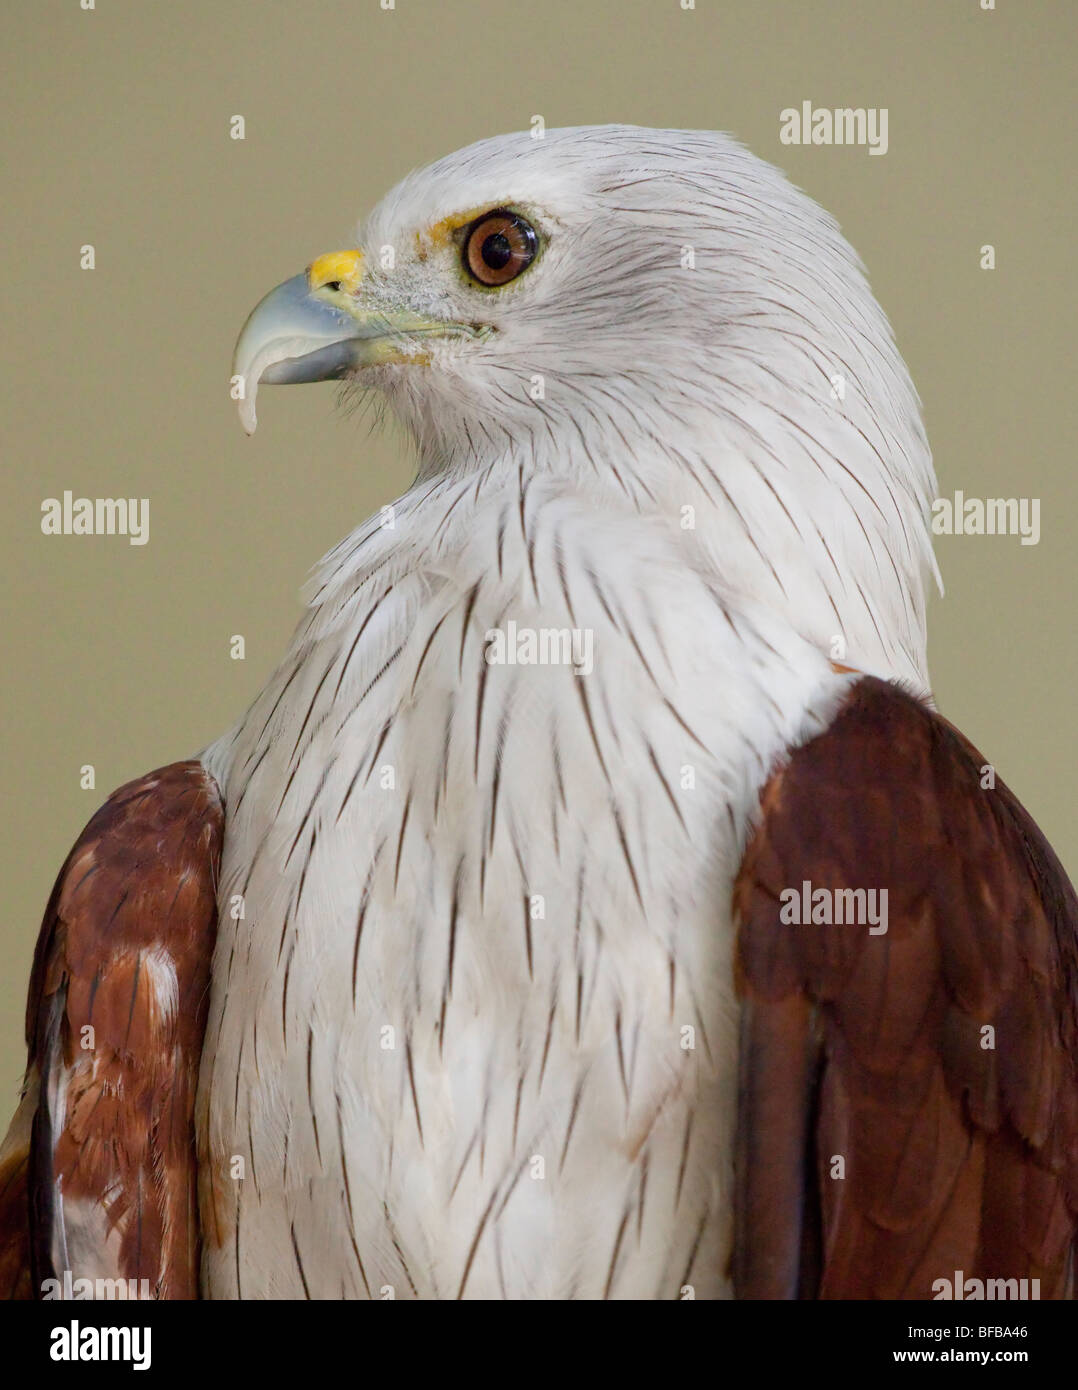 Bianco-pesce panciuto Eagle, Haliaeetus leucogaster, bianco-gonfiato aquila del mare, Lang Laut/Siput (Malesia) Foto Stock